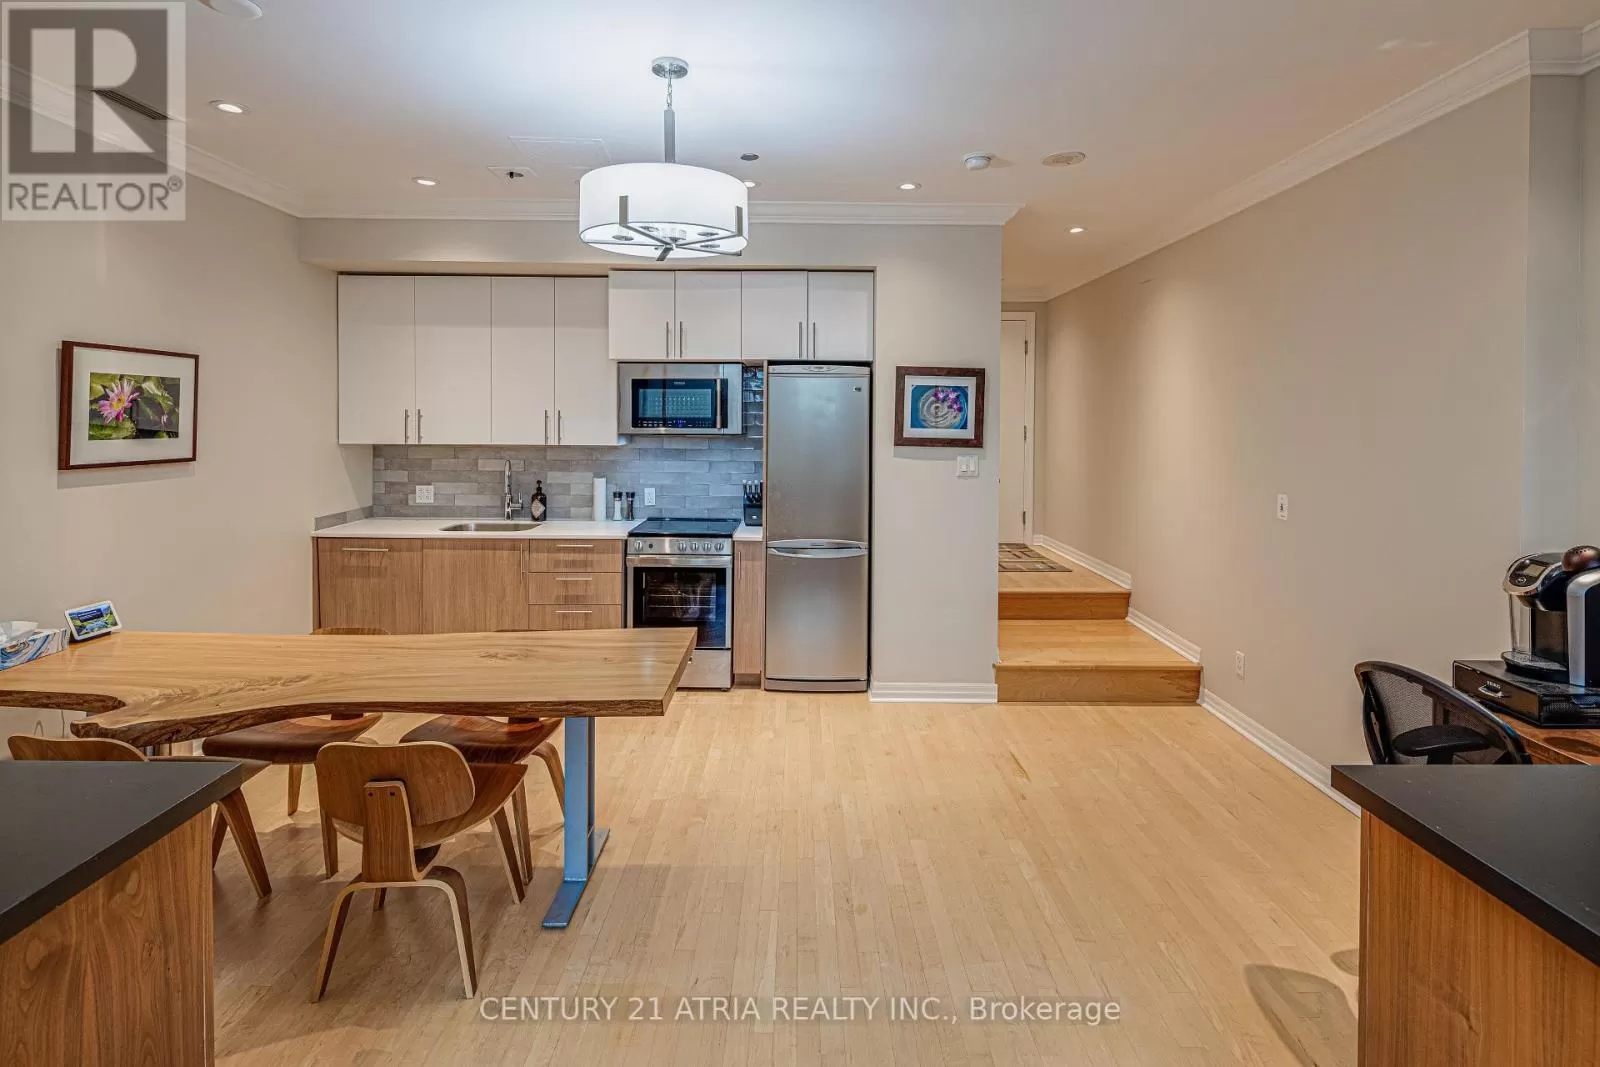 Apartment for rent: 1412 - 1 King Street W, Toronto, Ontario M5H 1A1